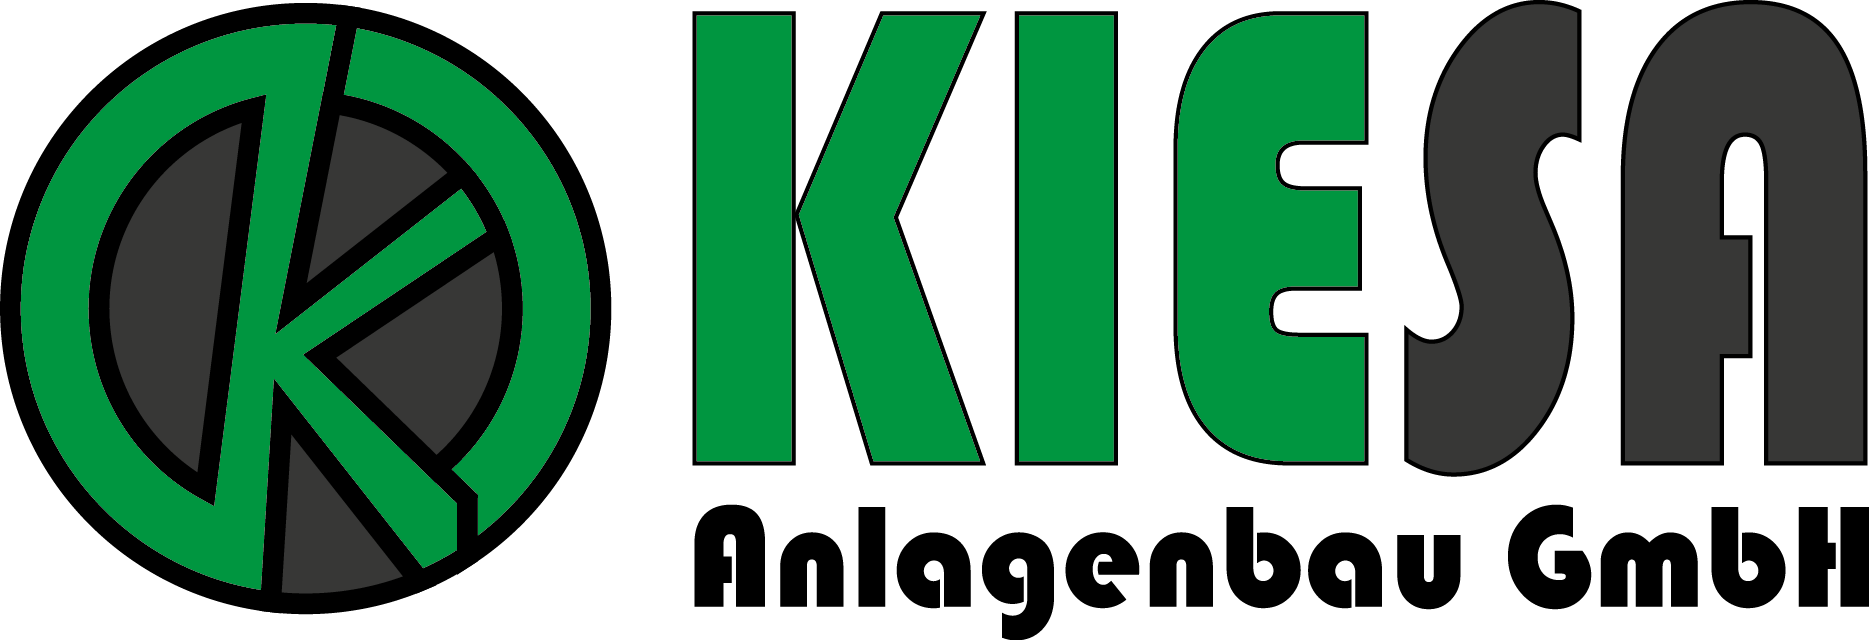 Logo_Kiesa